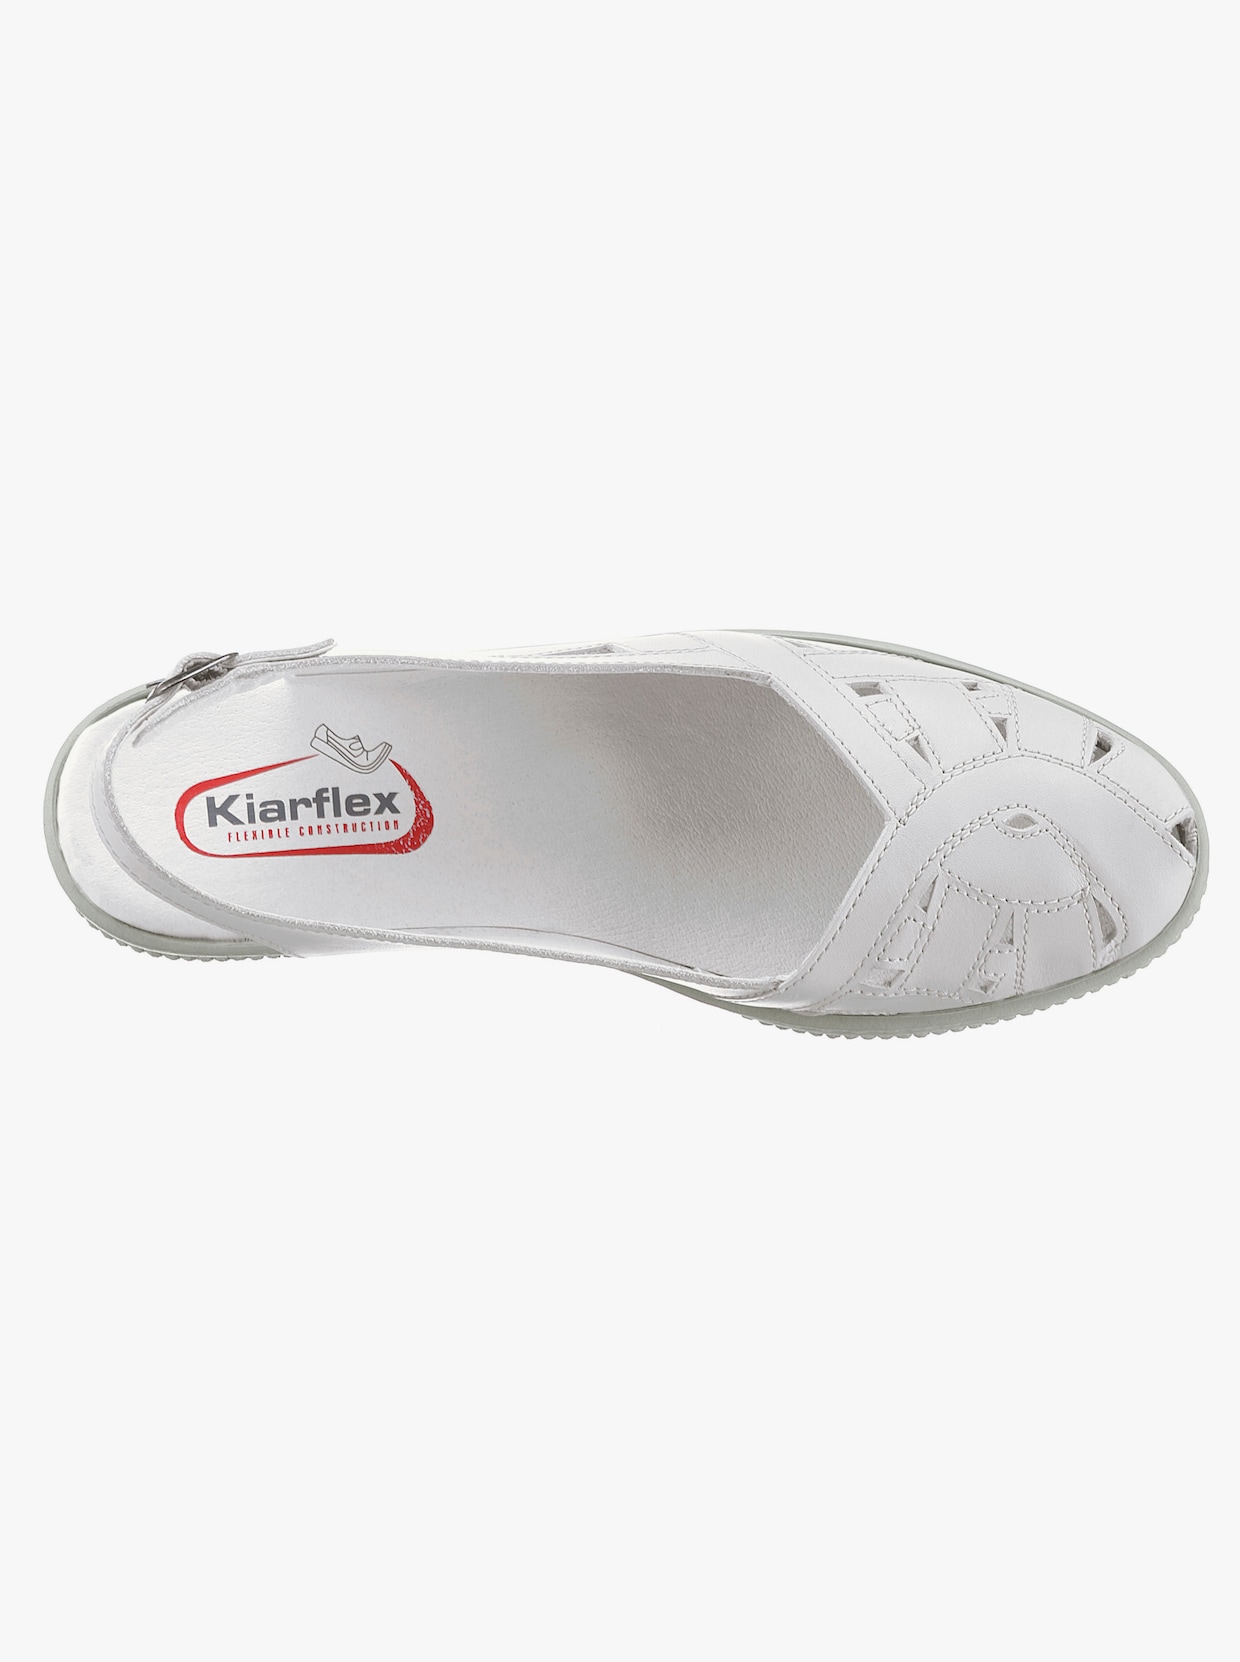 Kiarteflex Sandále - biela